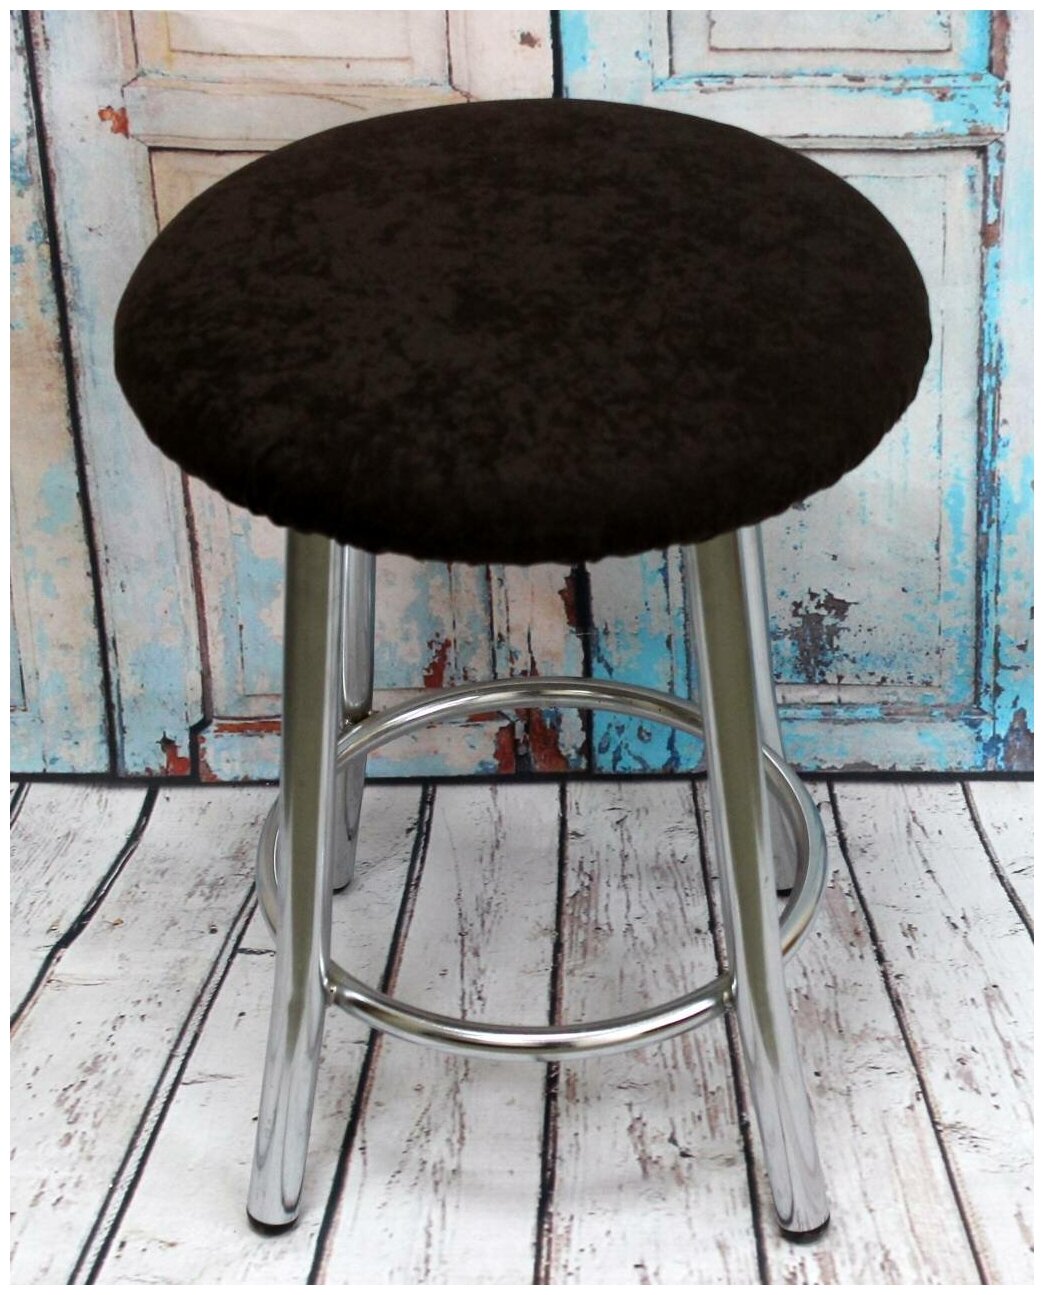 Чехол MATEX VELOURS темно-коричневый на табурет, стул (резинка, фиксатор), ткань велюр, с поролоном, 33х33х2 см